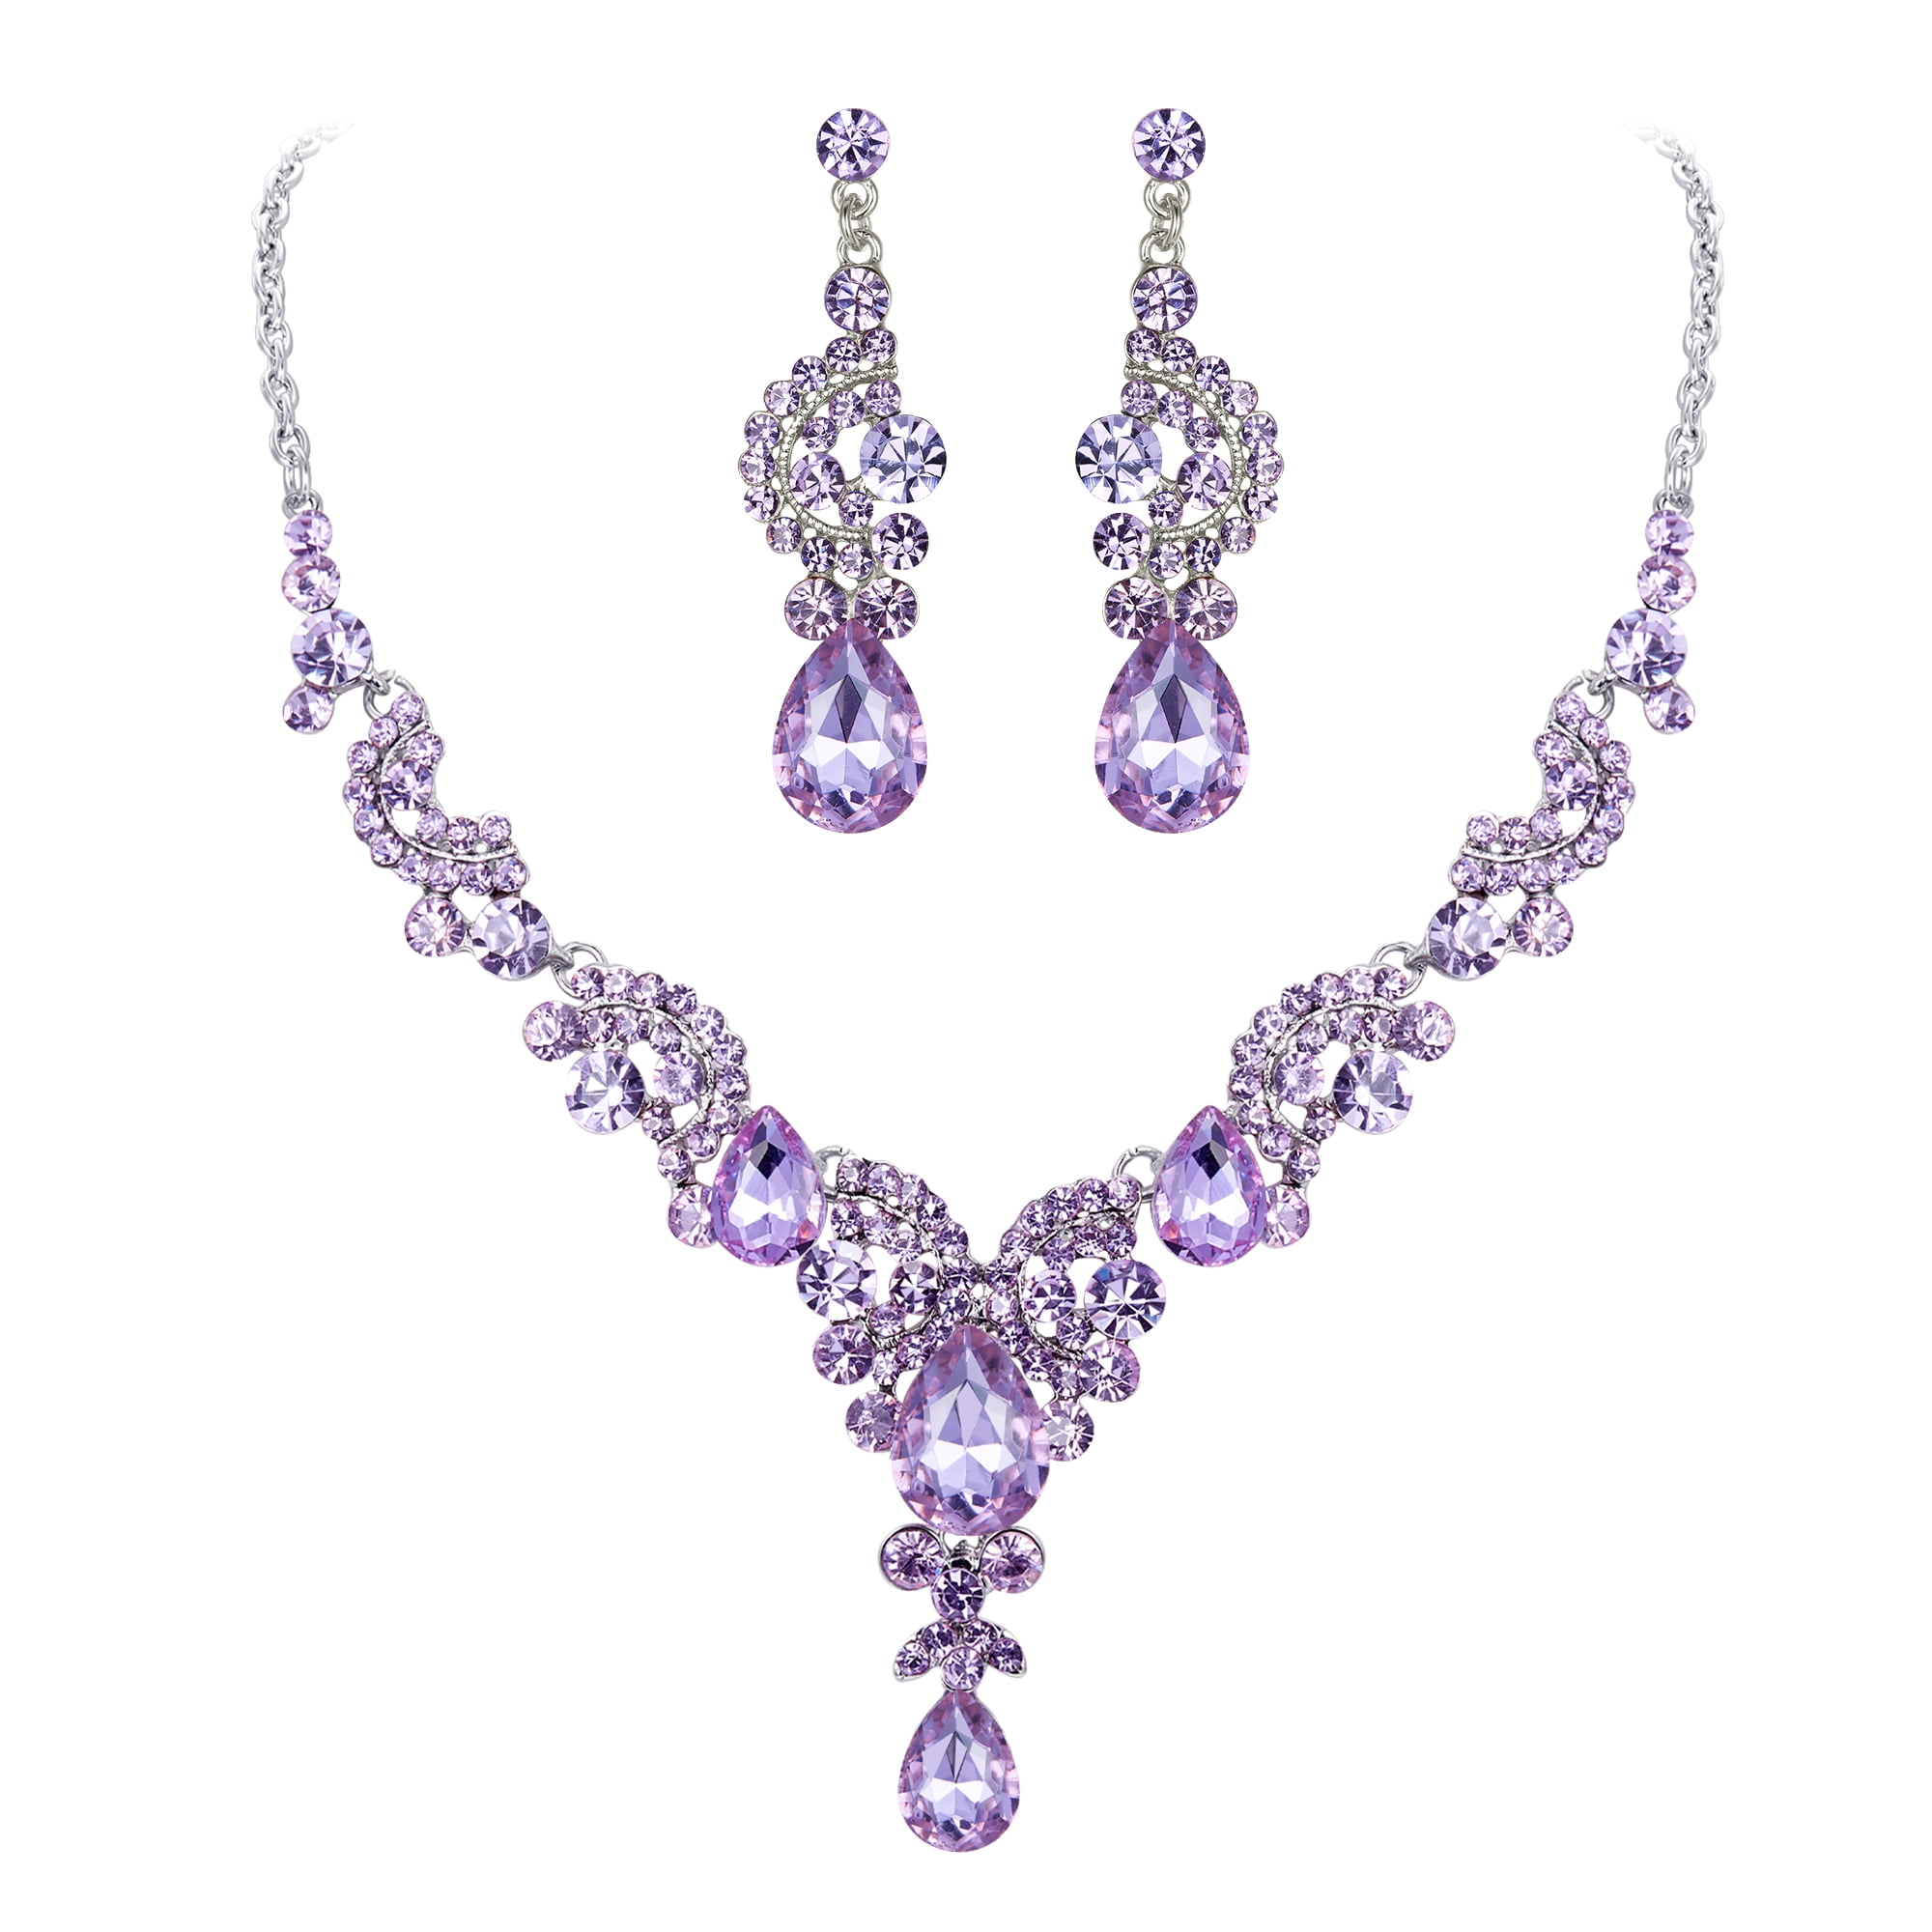 Xpoko New Crystal Dangle Earrings For Women Rhinestone Earrings Weddings  Ladies Party Fashion Jewelry Accessories Gifts | Crystal dangle earrings,  Fashion accessories jewelry, Bridal earrings drop